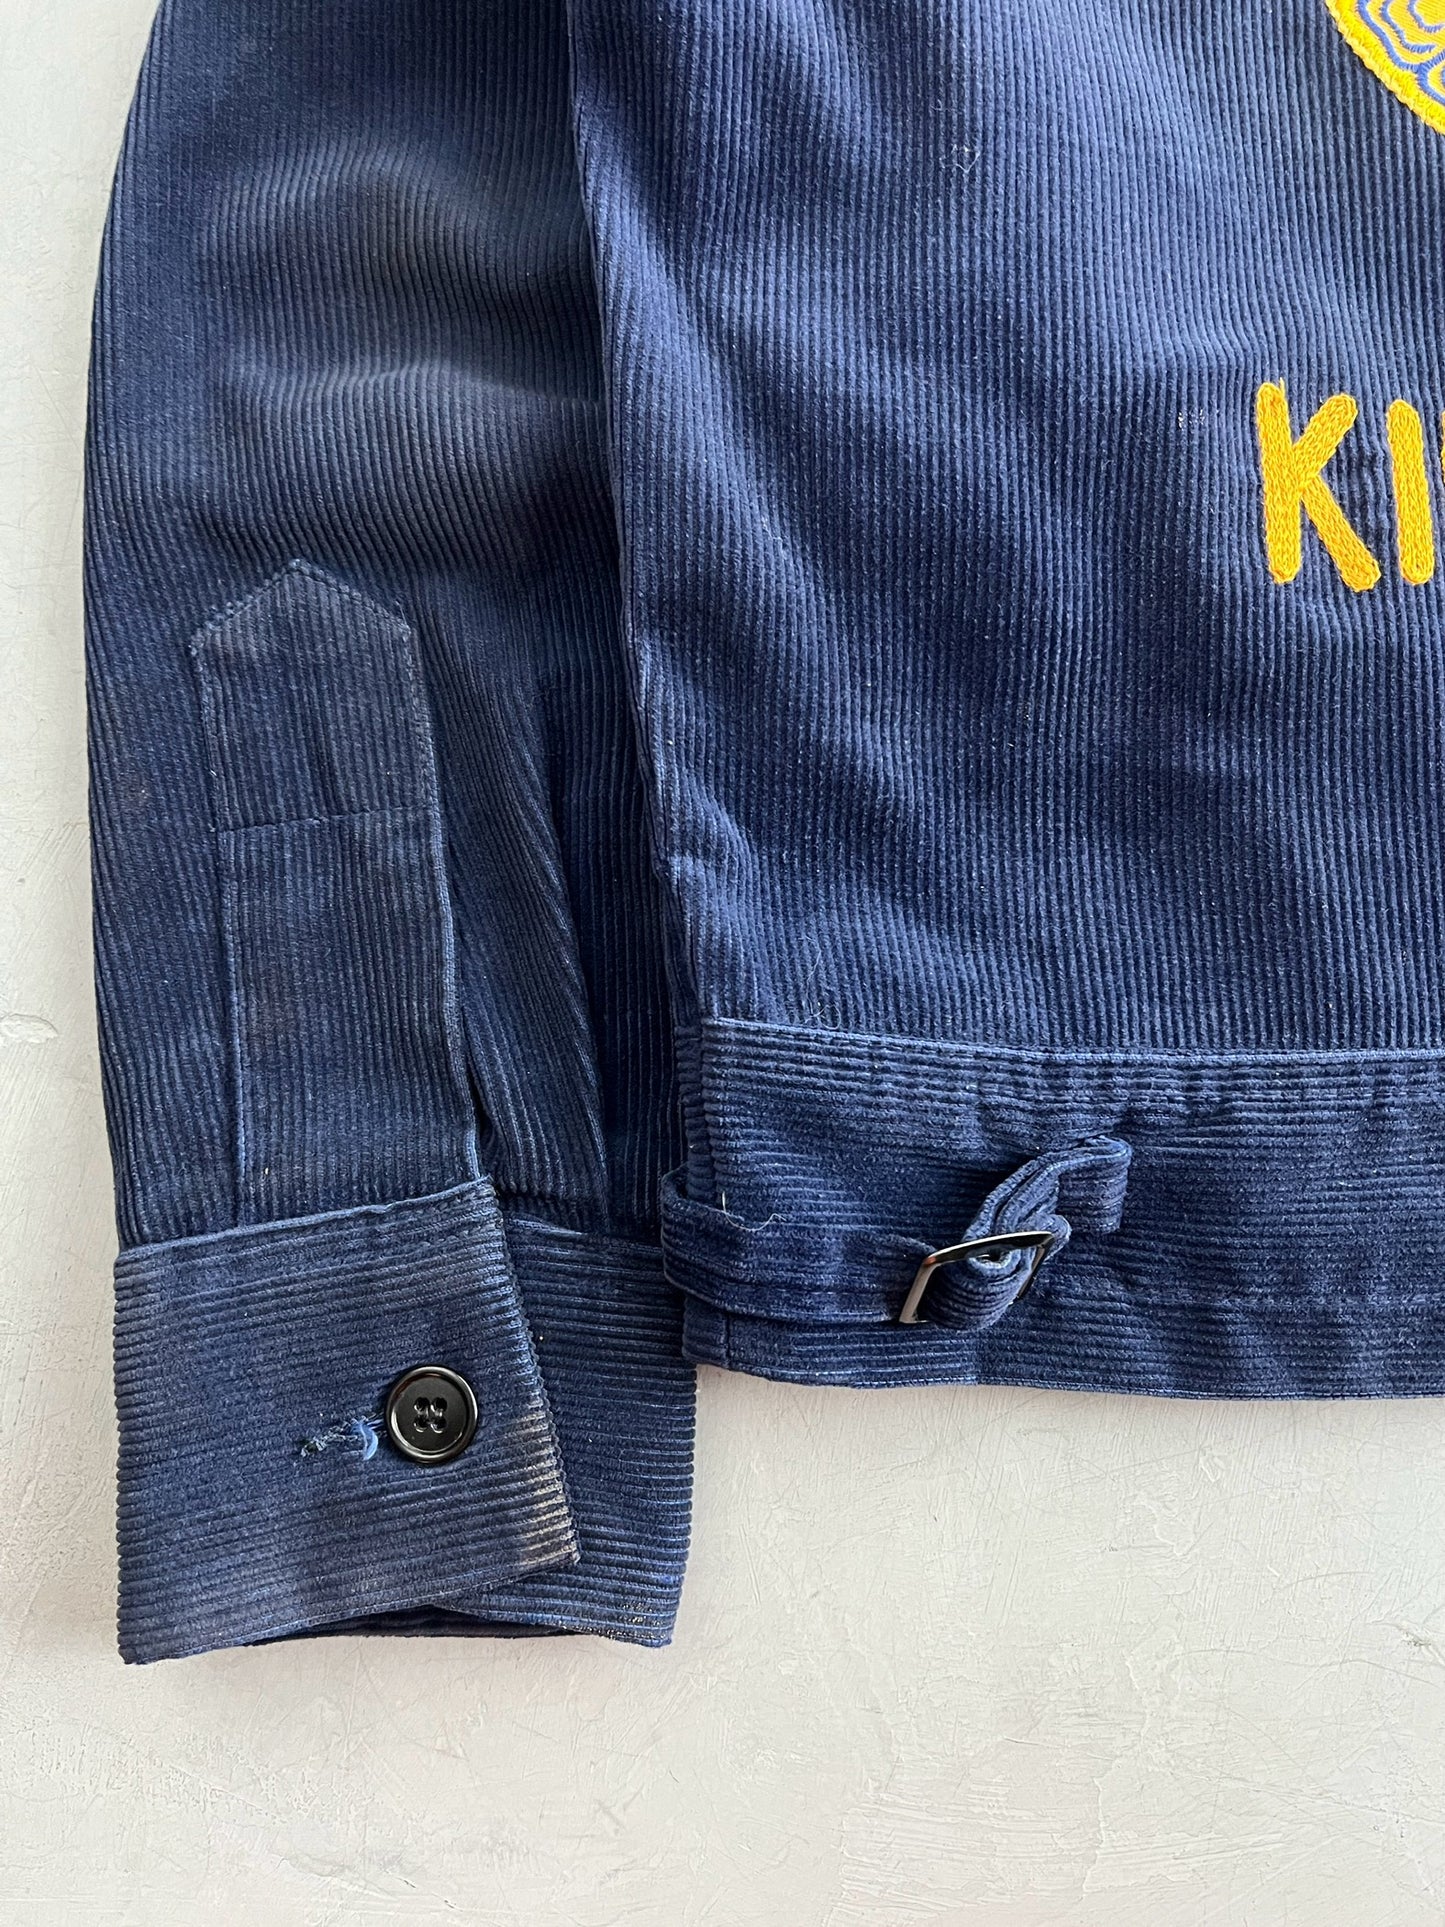 70's Arizona Kingman FFA Jacket [M]